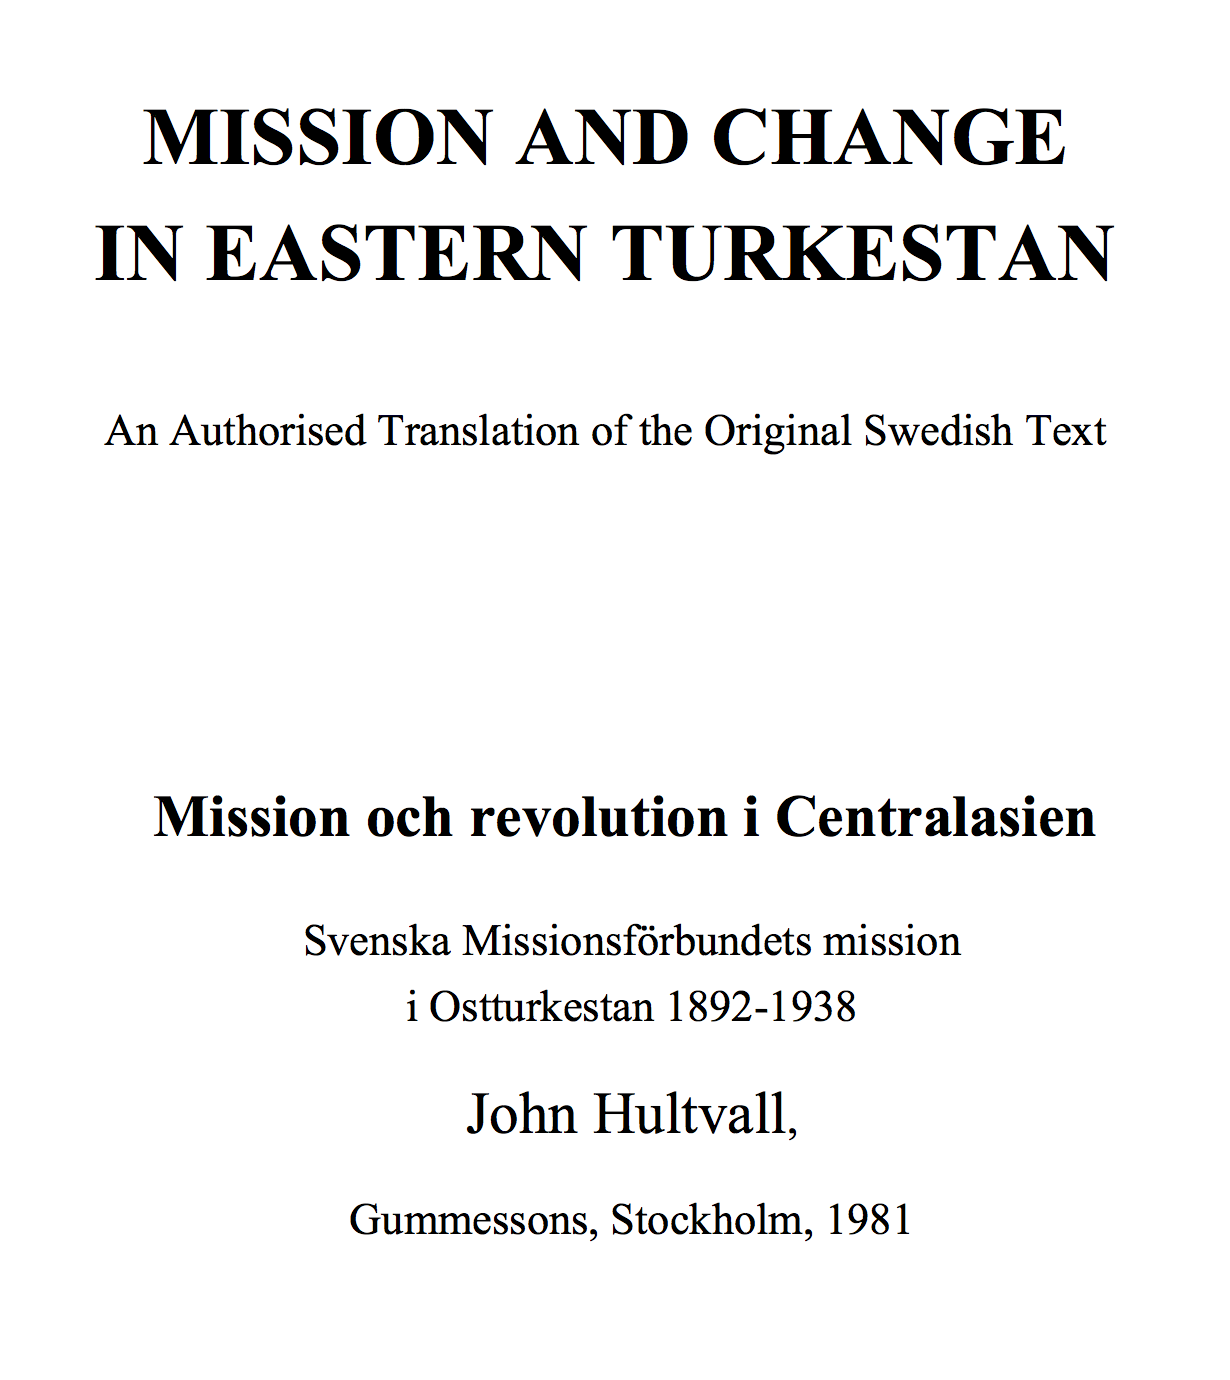 Mission and change in Eastern Turkestan John Hultvall